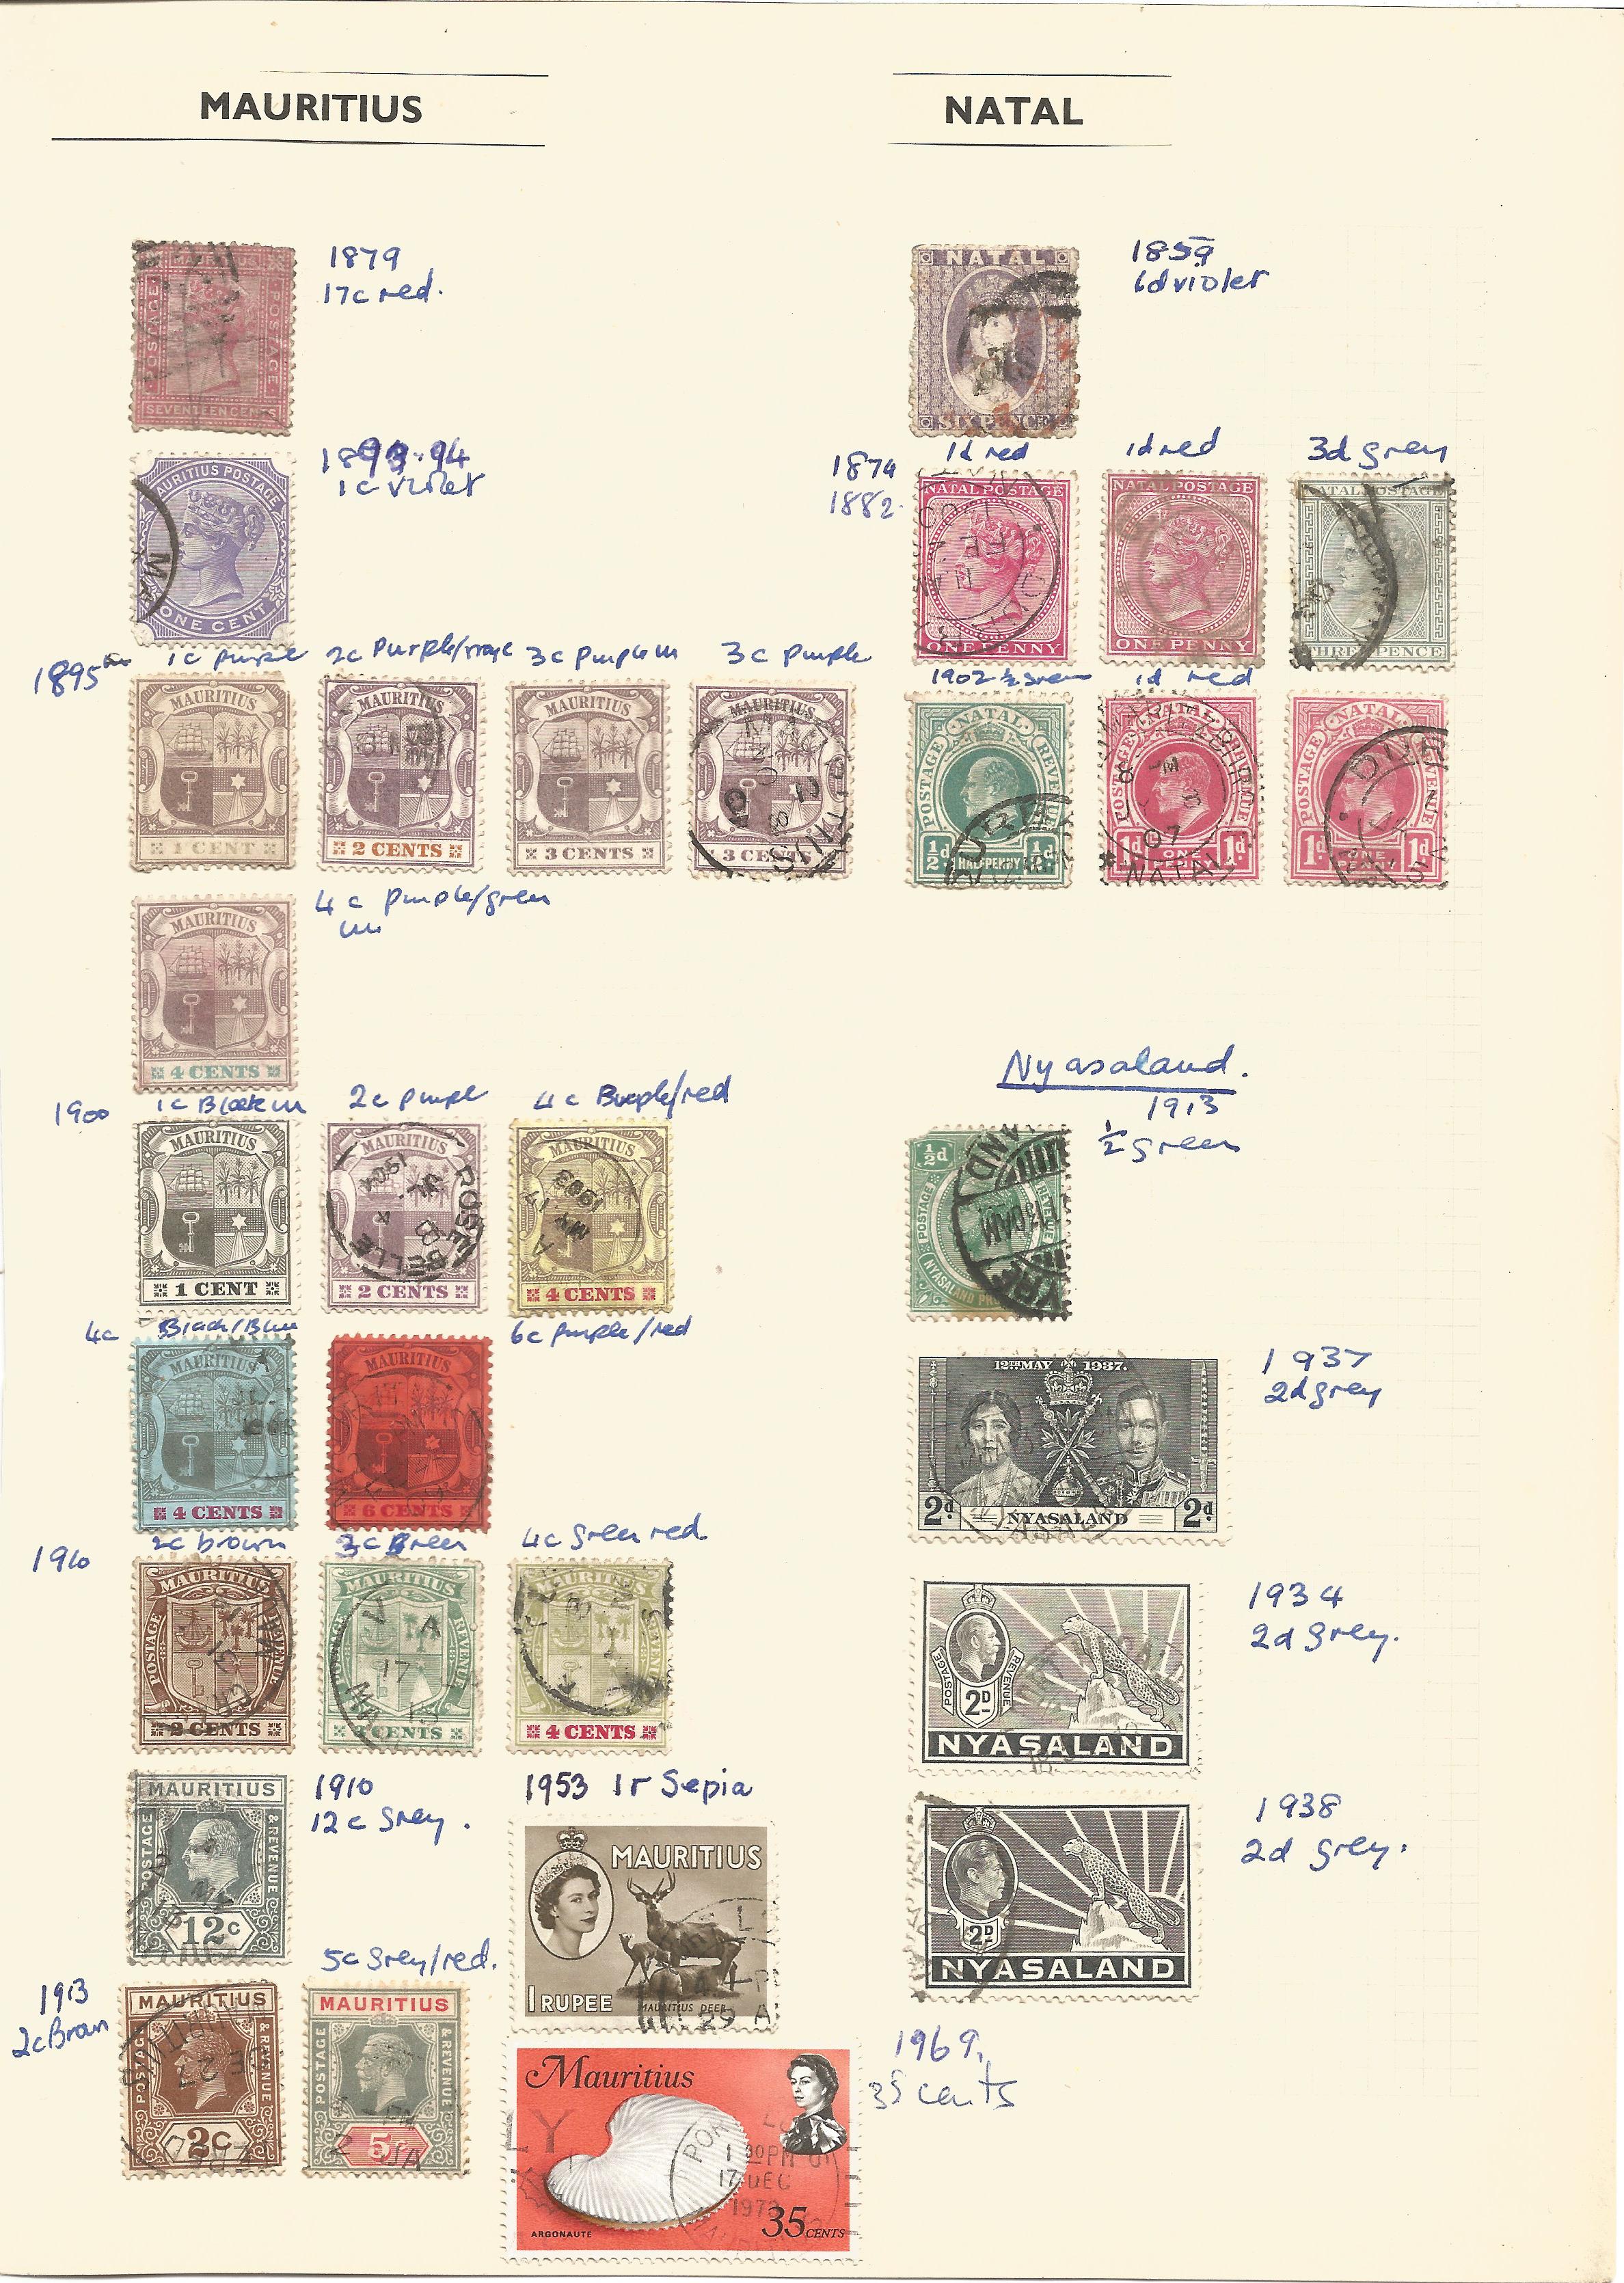 Mauritius, Natal, Nigeria, North Borneo, Basutoland, stamps on loose sheets, approx. 40. Good